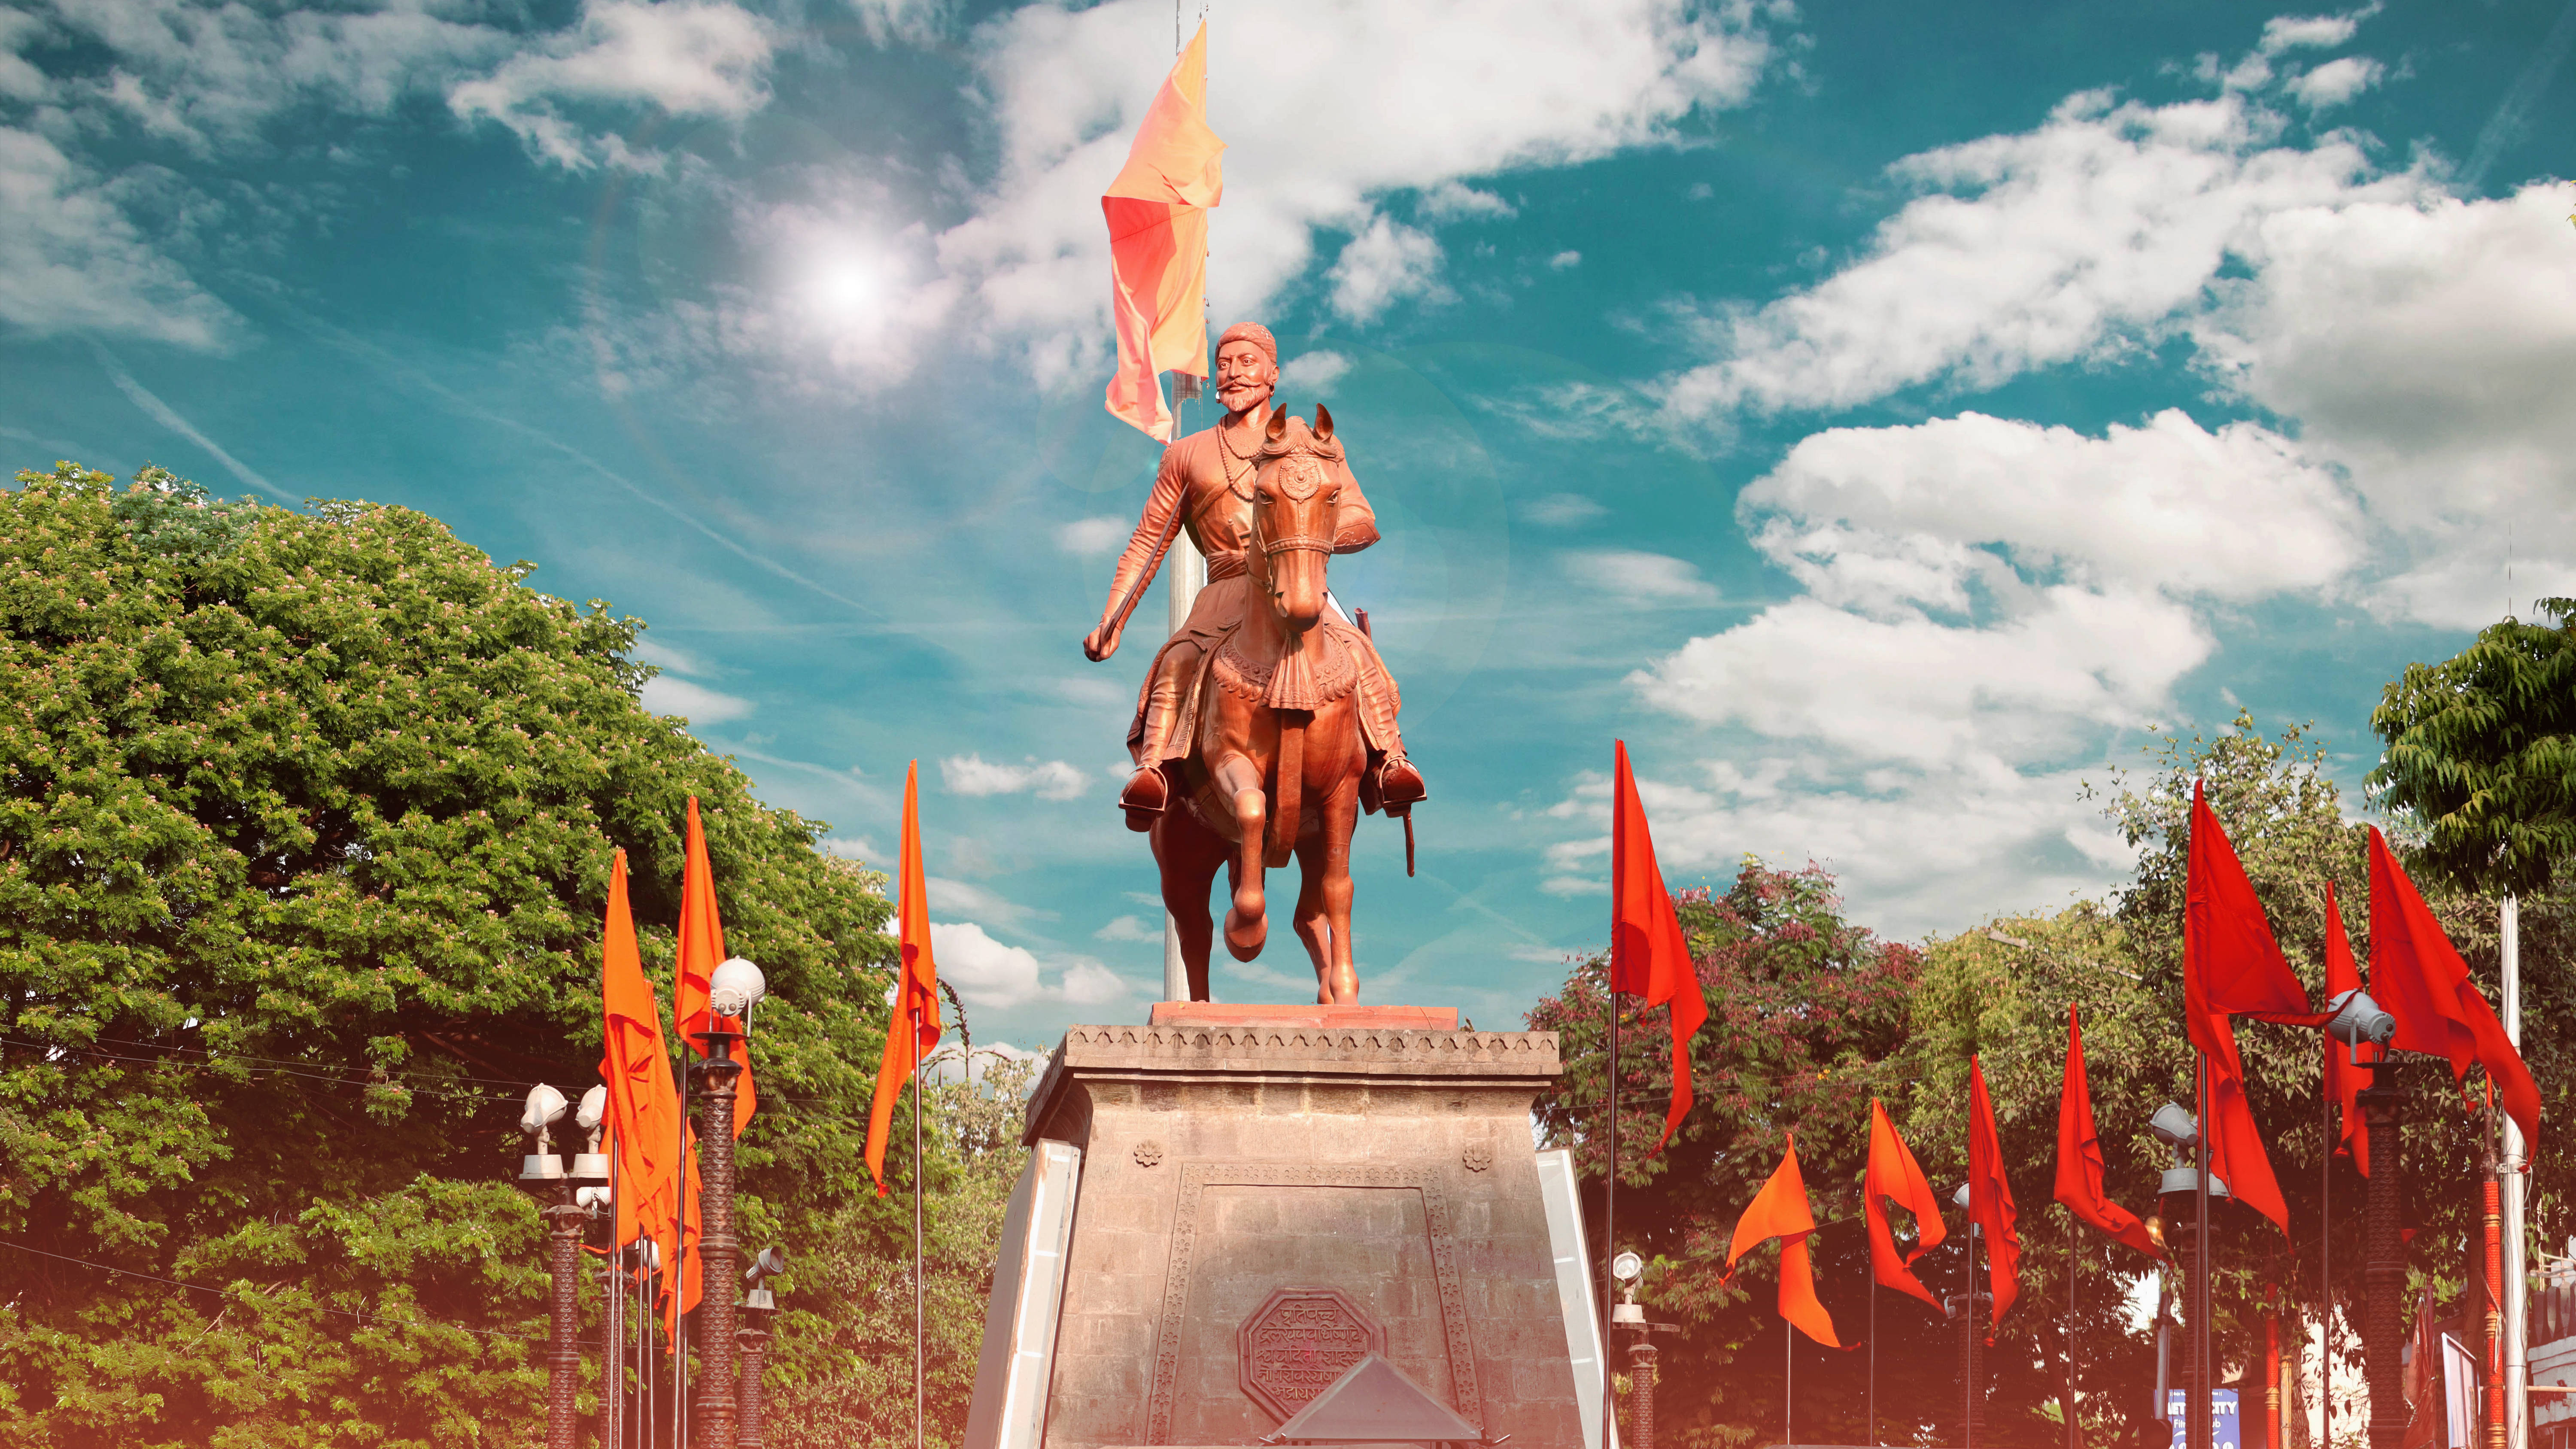 Download Chhatrapati Shivaji Maharaj And Horse Statue Wallpaper | Wallpapers .com